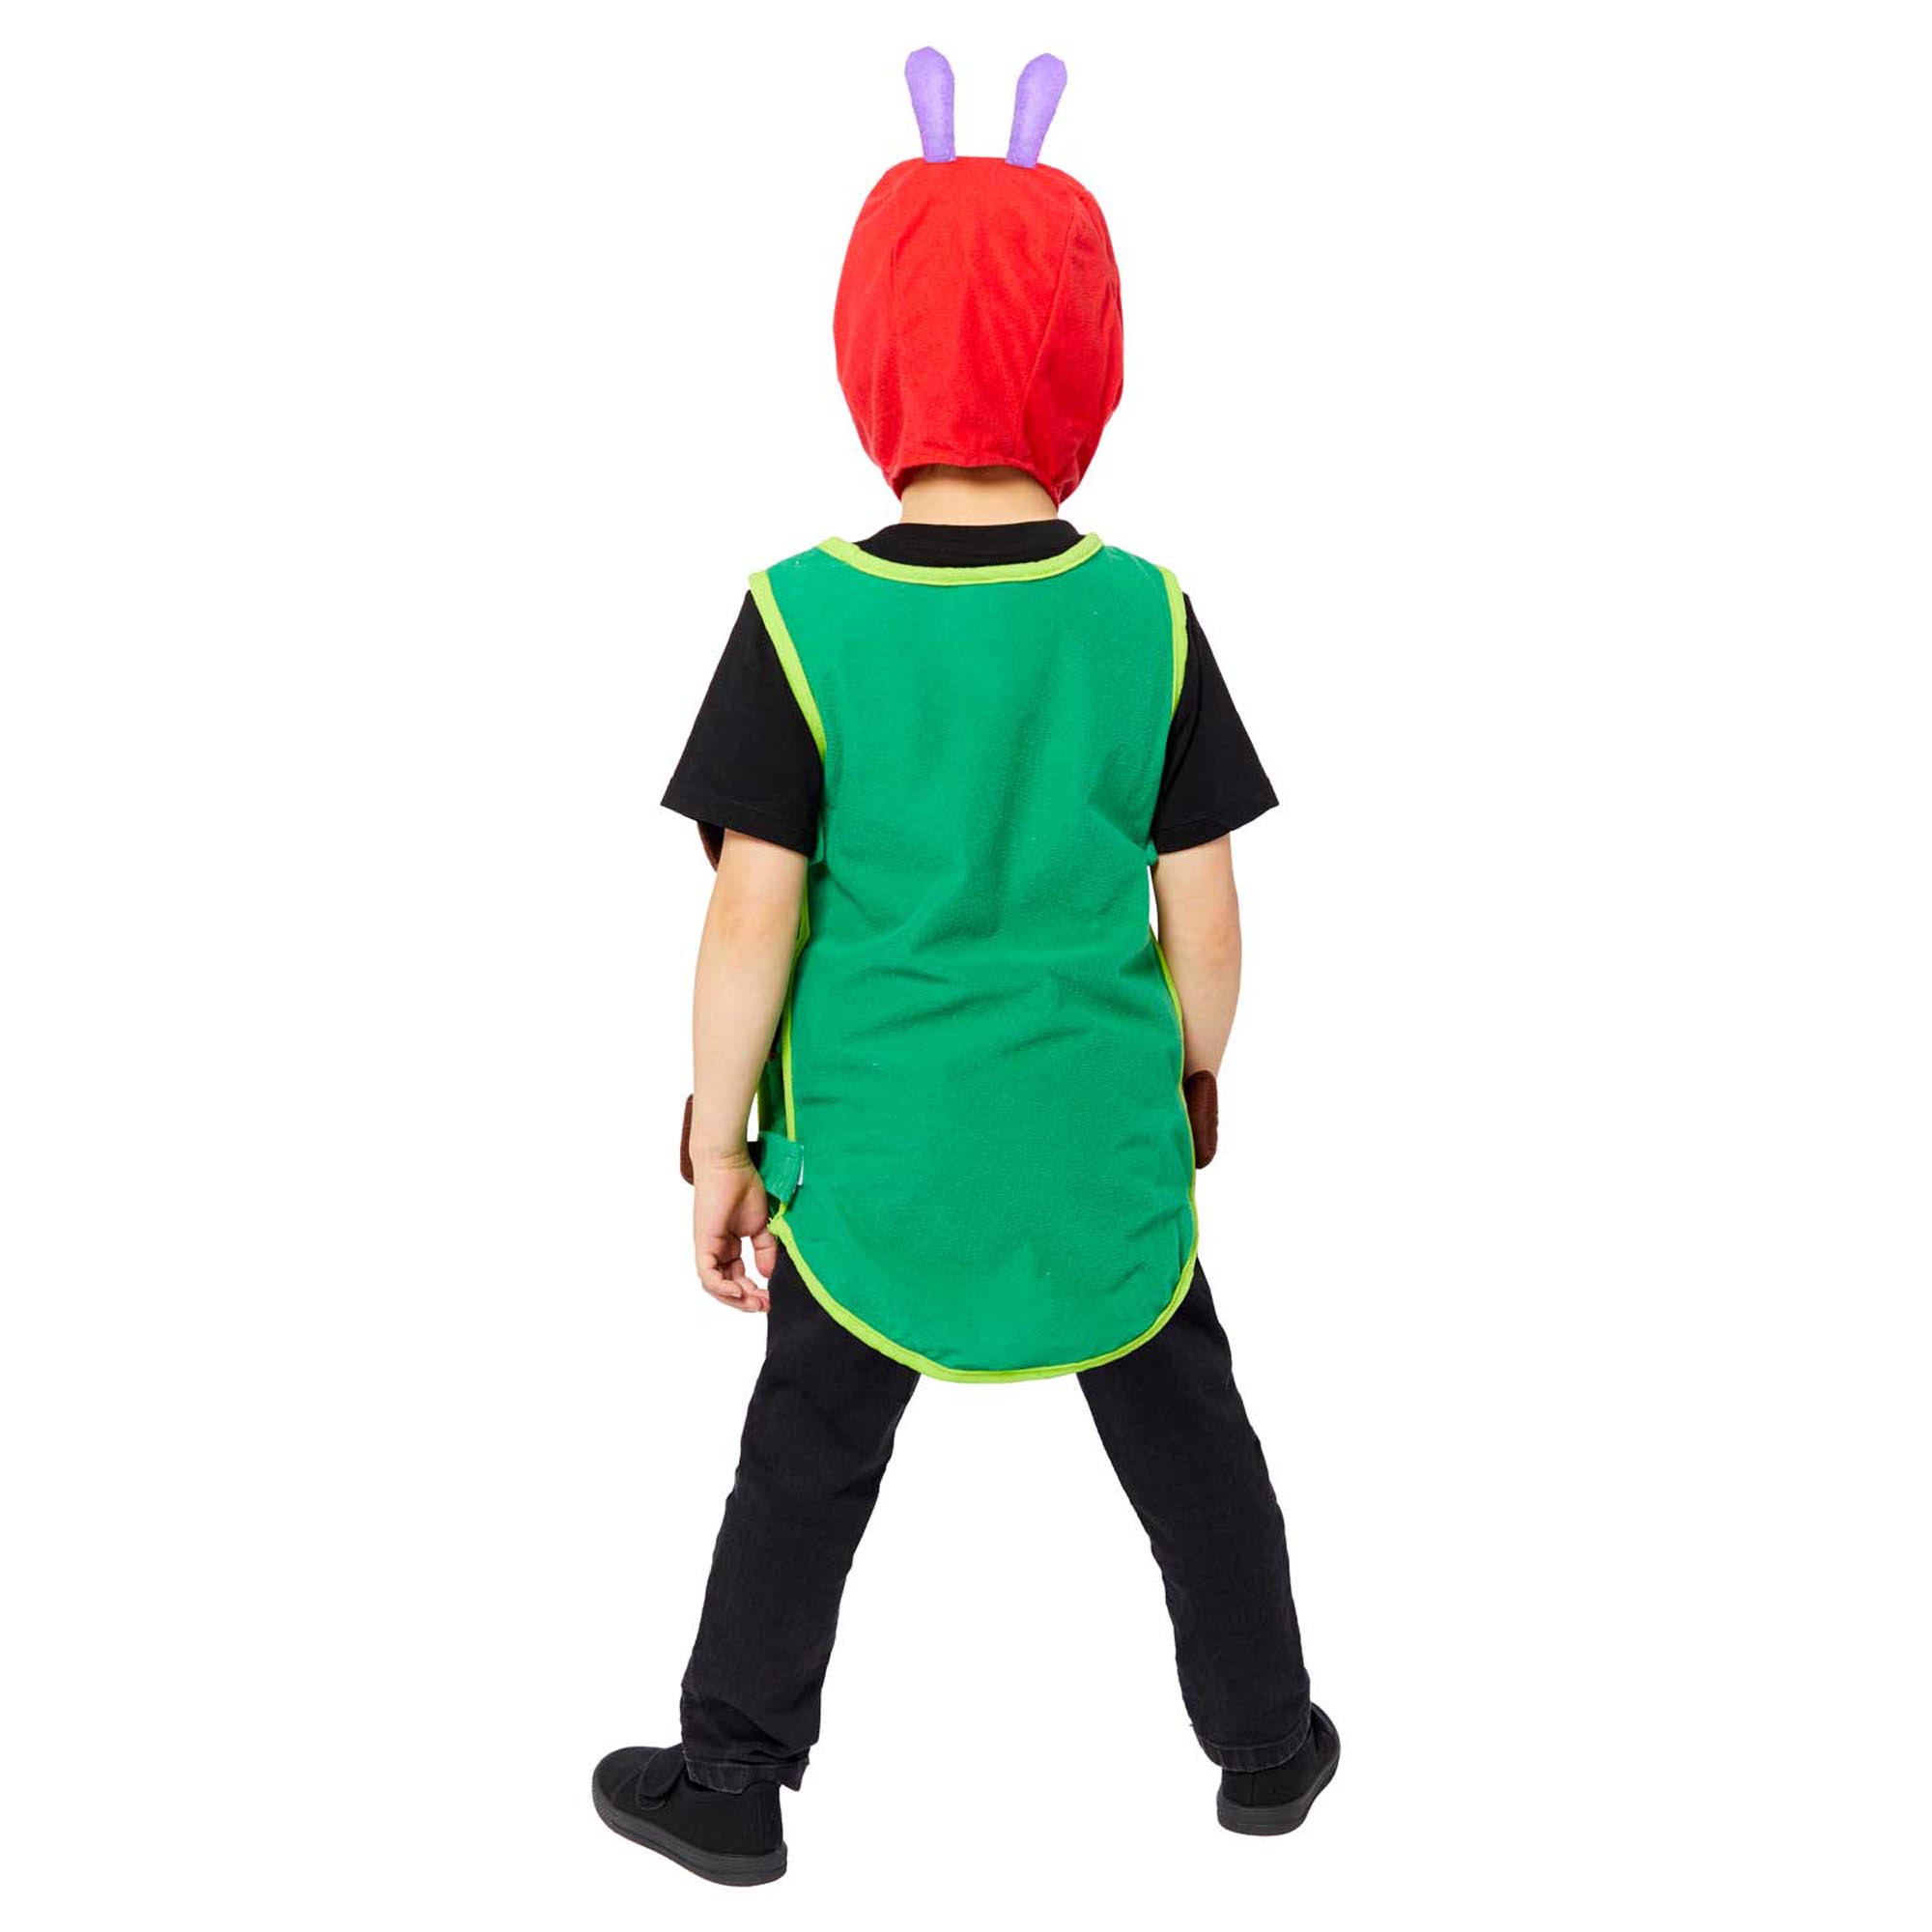 The Very Hungry Caterpillar Children's Fancy Dress Costume